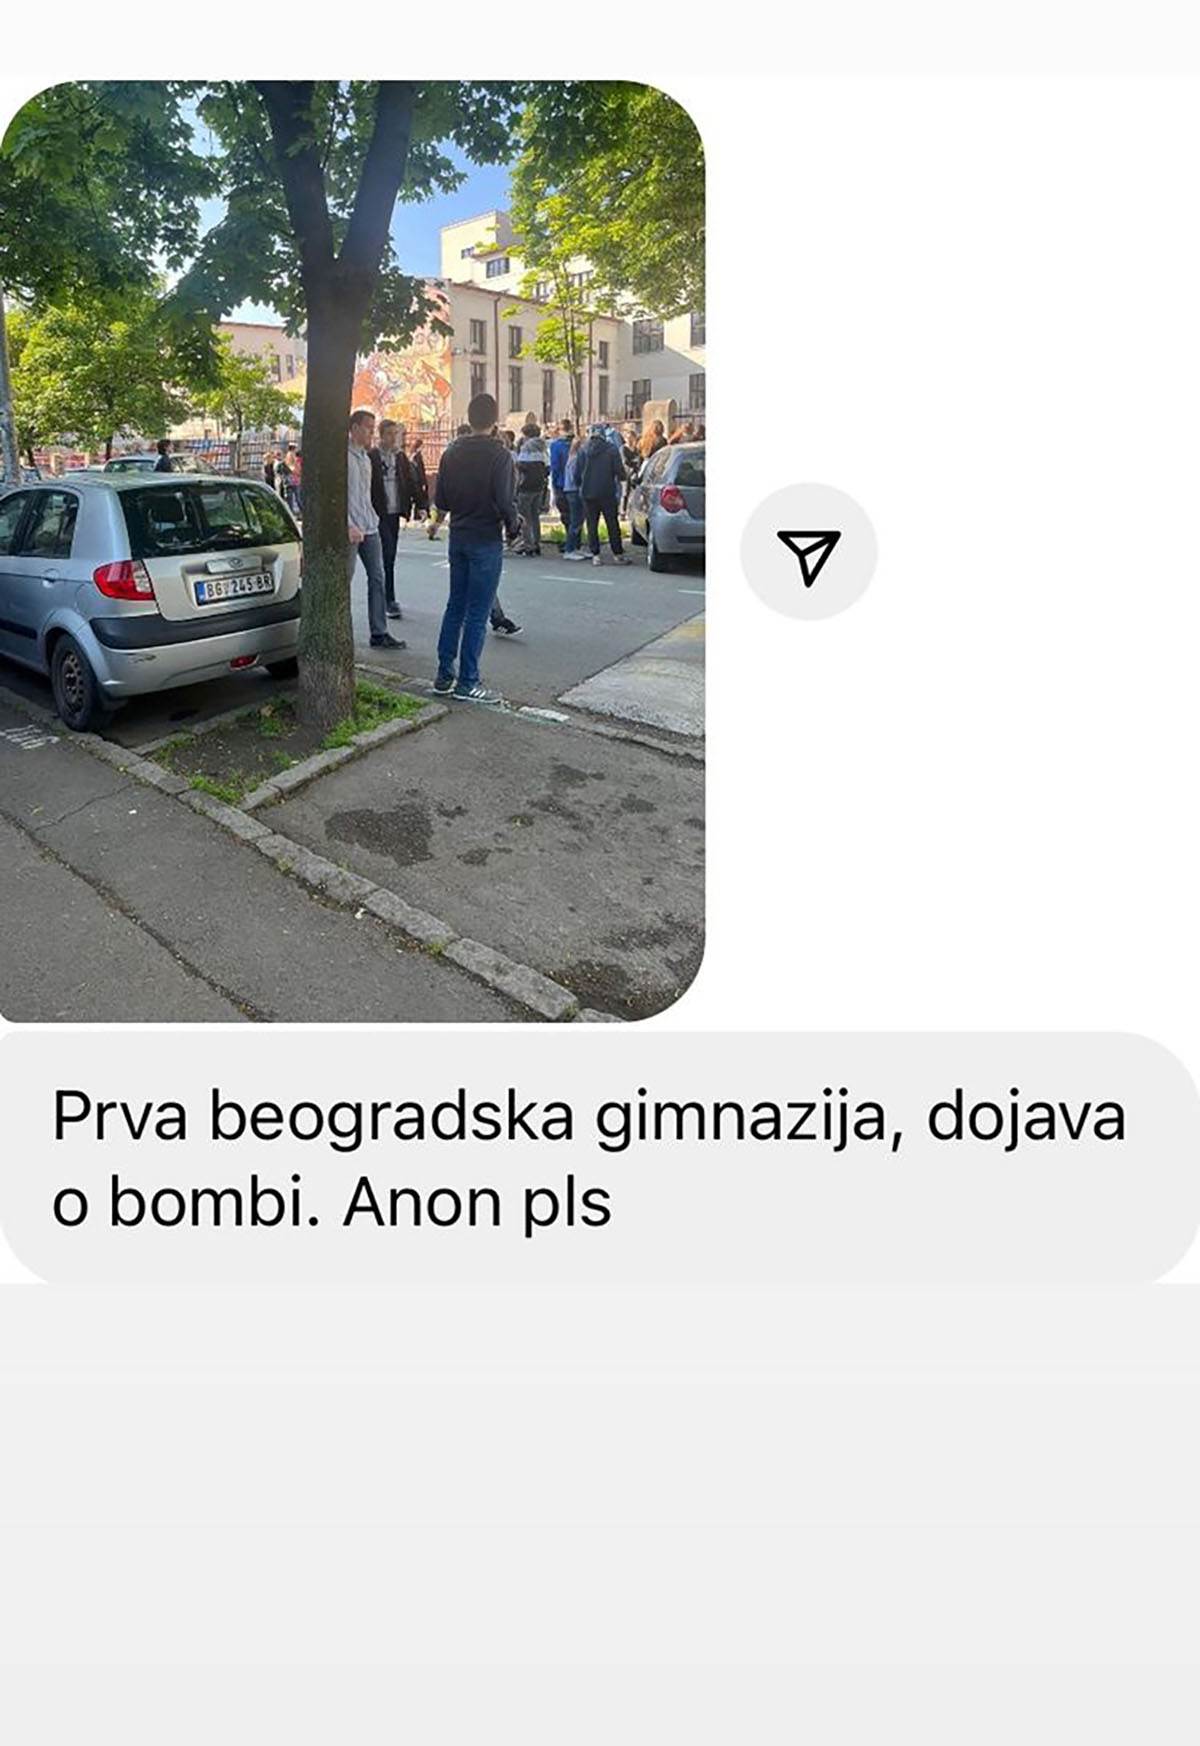  Dojava o bombi u 20 beogradskih škola - Instagram/screenshot/serbialive_beograd 